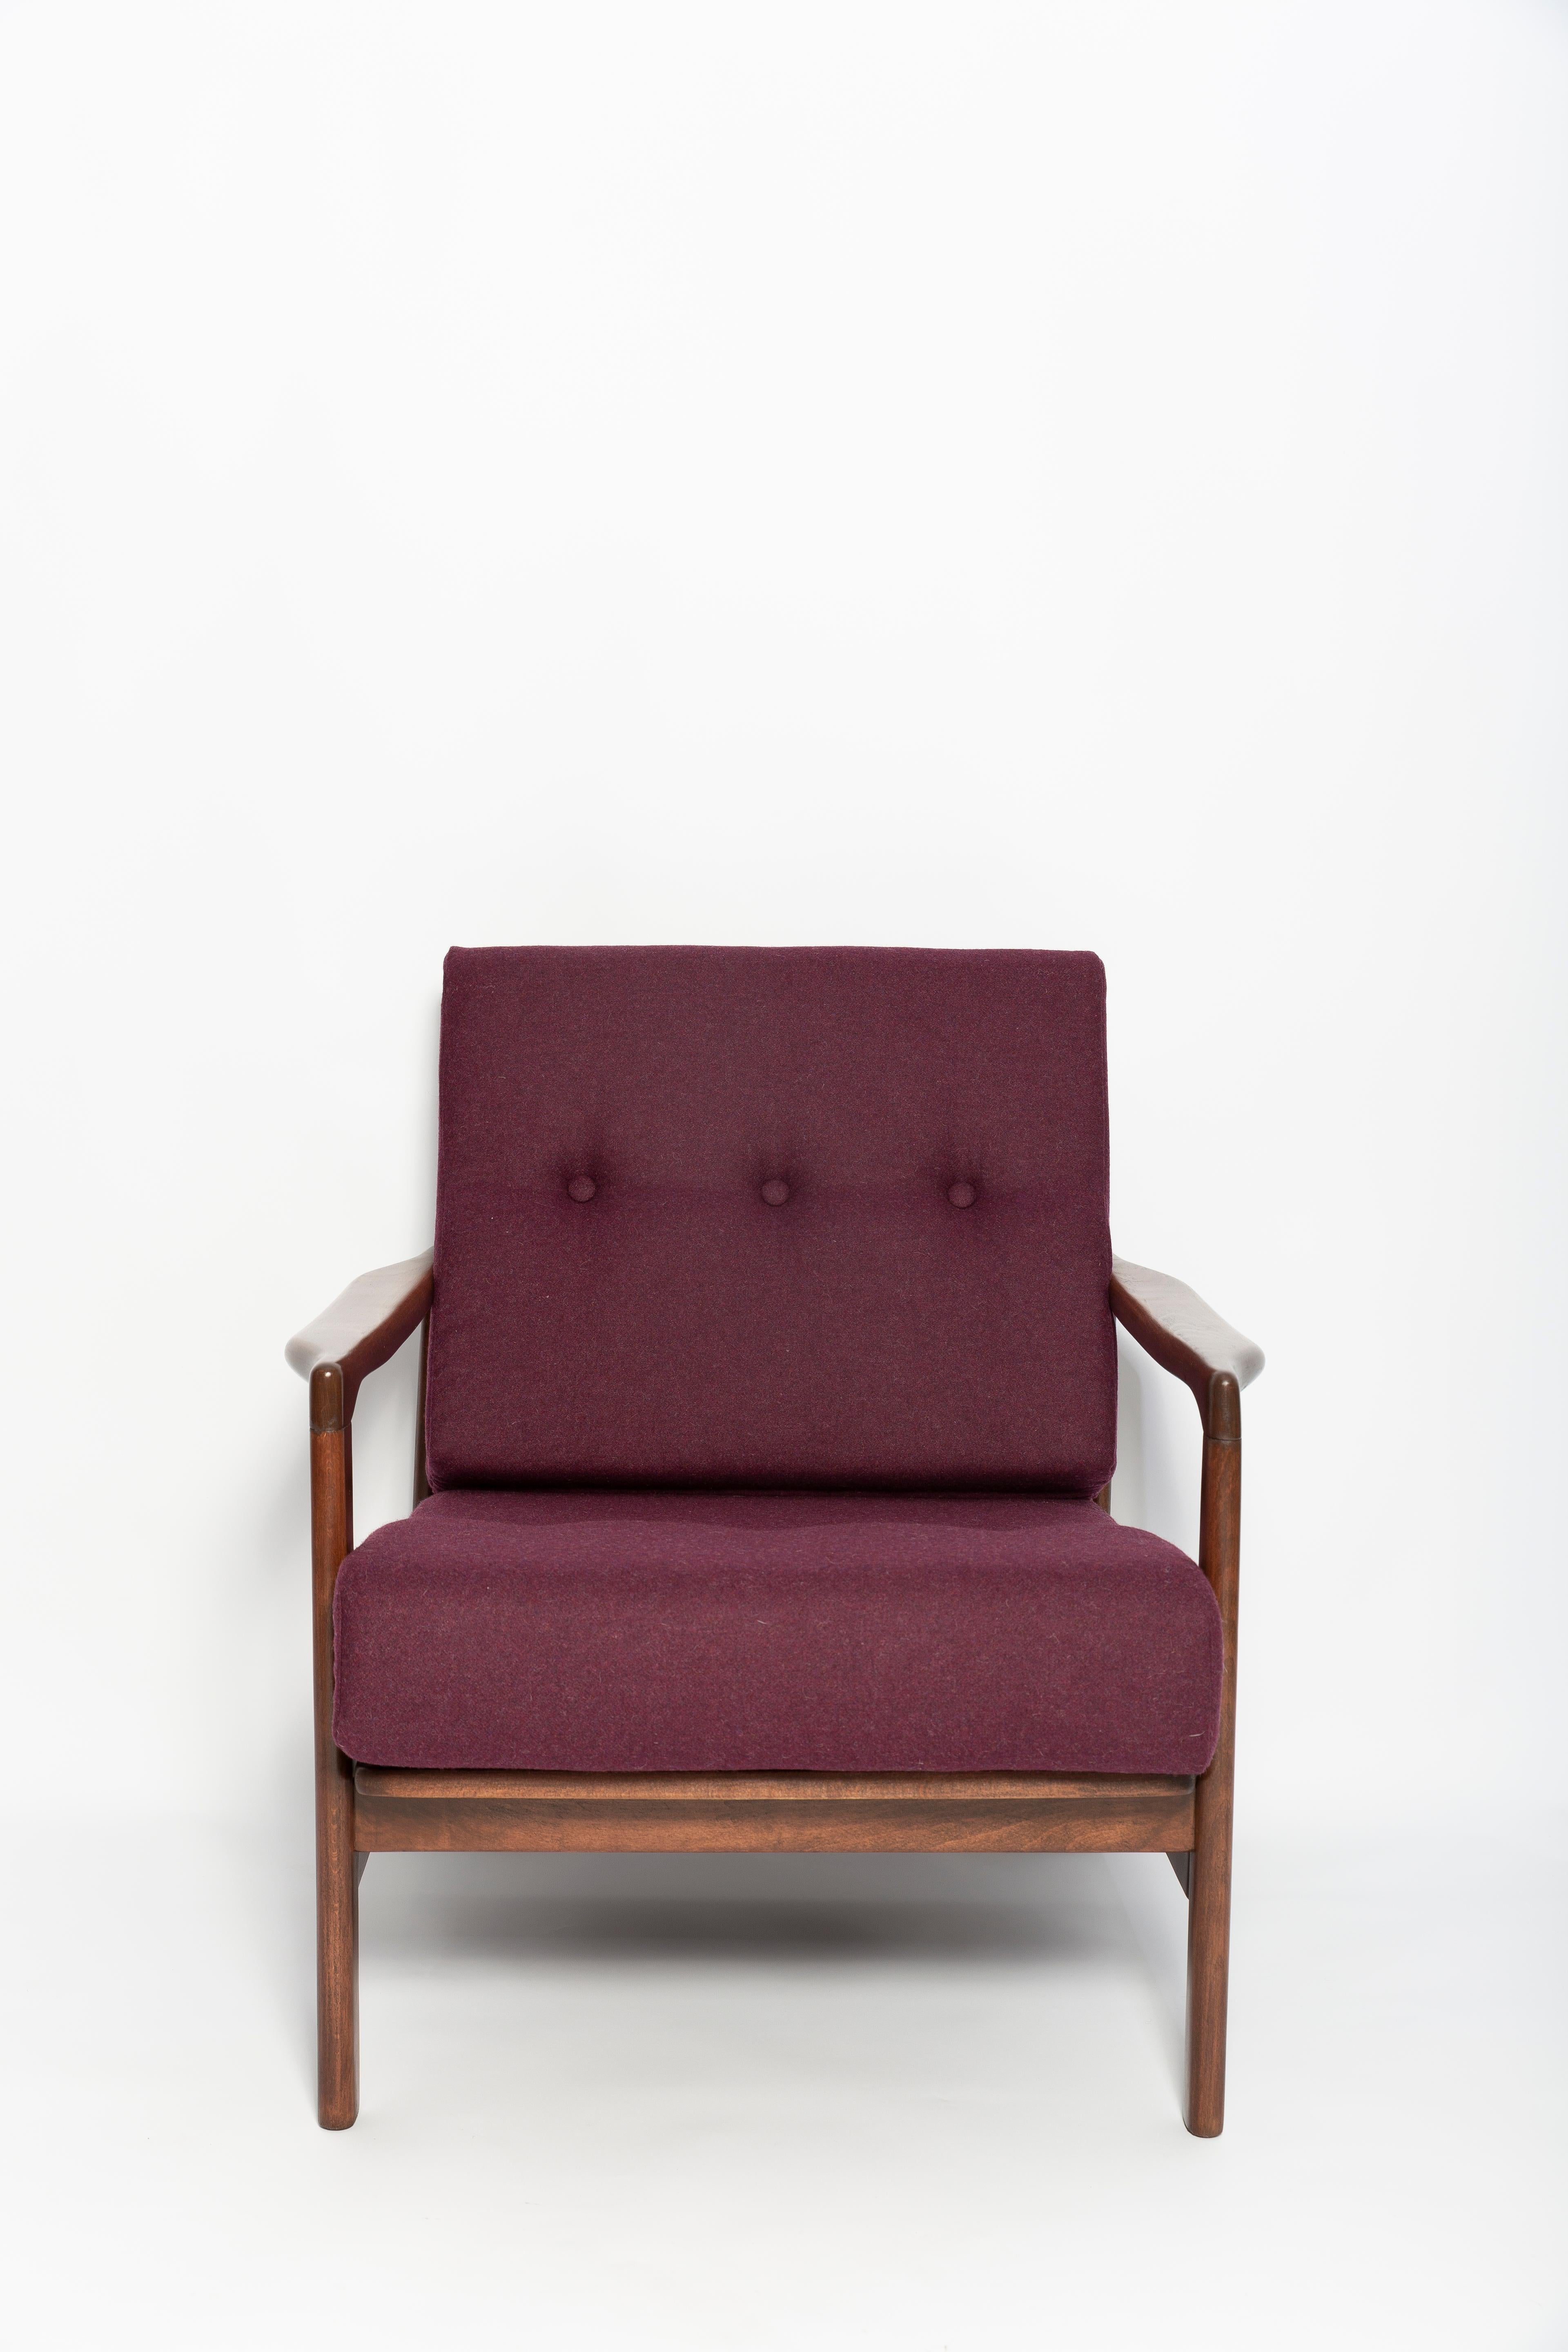 Pair of Mid Century Purple Wool Velvet Armchairs, Zenon Baczyk, Poland, 1960s For Sale 1